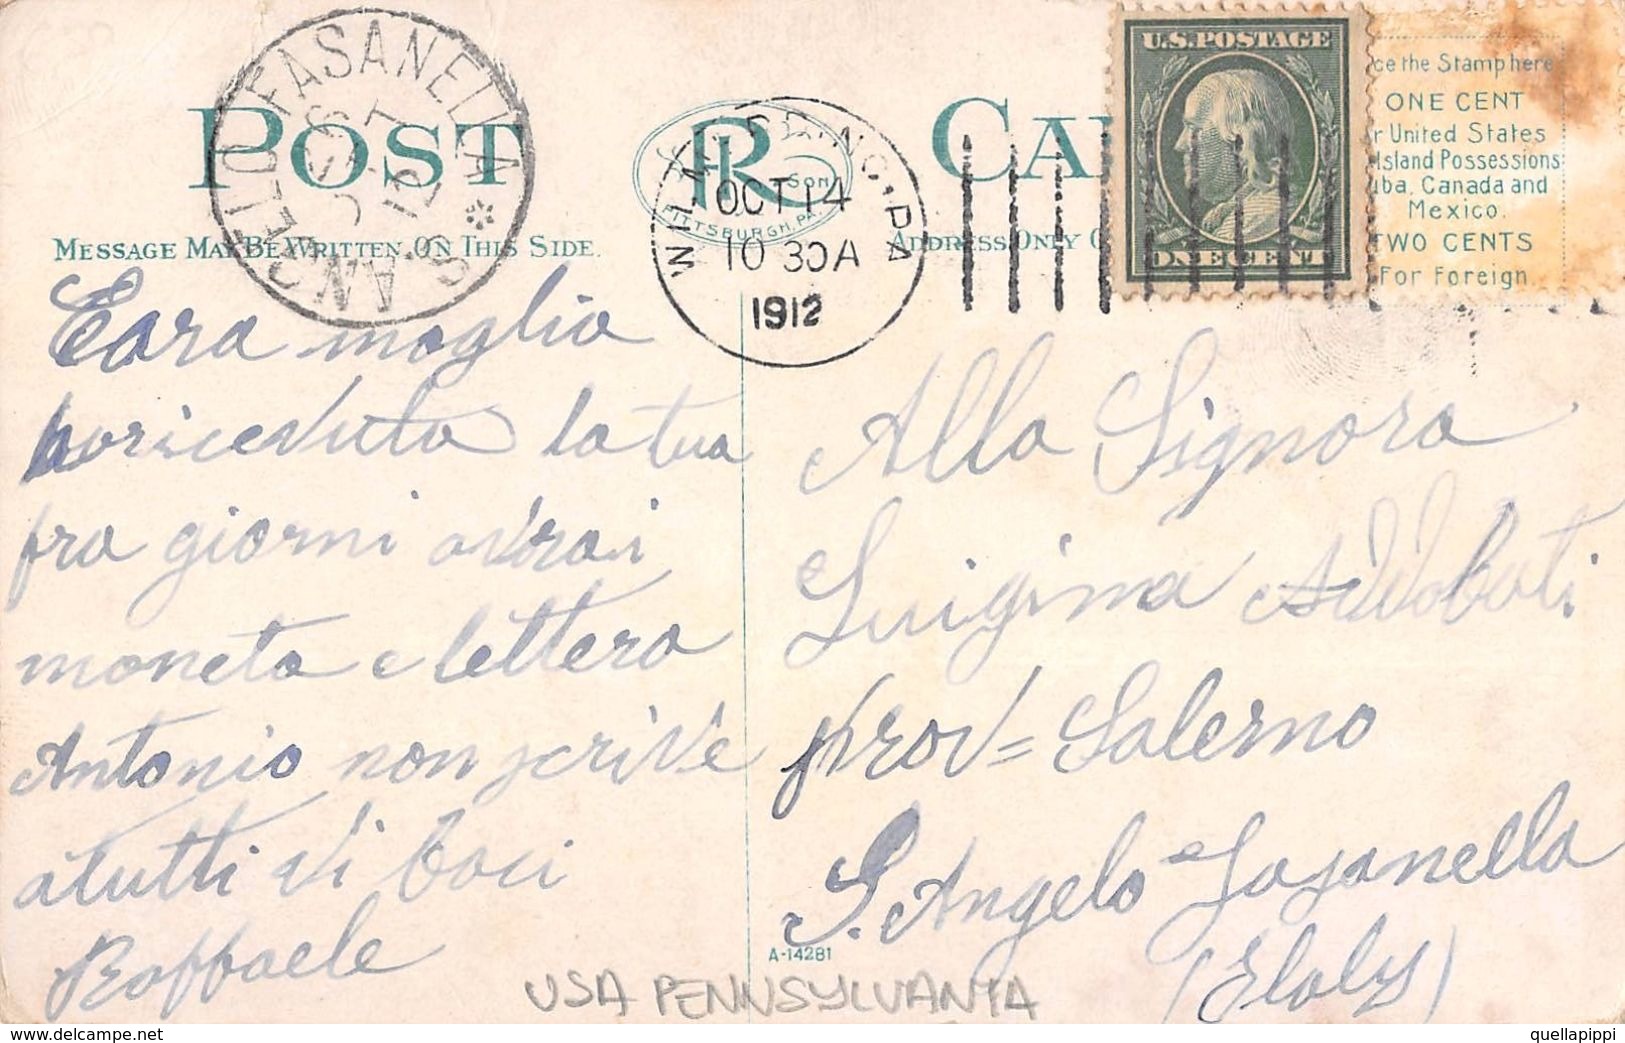 06668 "PENNSYLVANIA - SCHENLEY HOTEL, PITTSBURGH, PA"  ANIMATA, AUTO.  CART  SPED 1912 - Pittsburgh